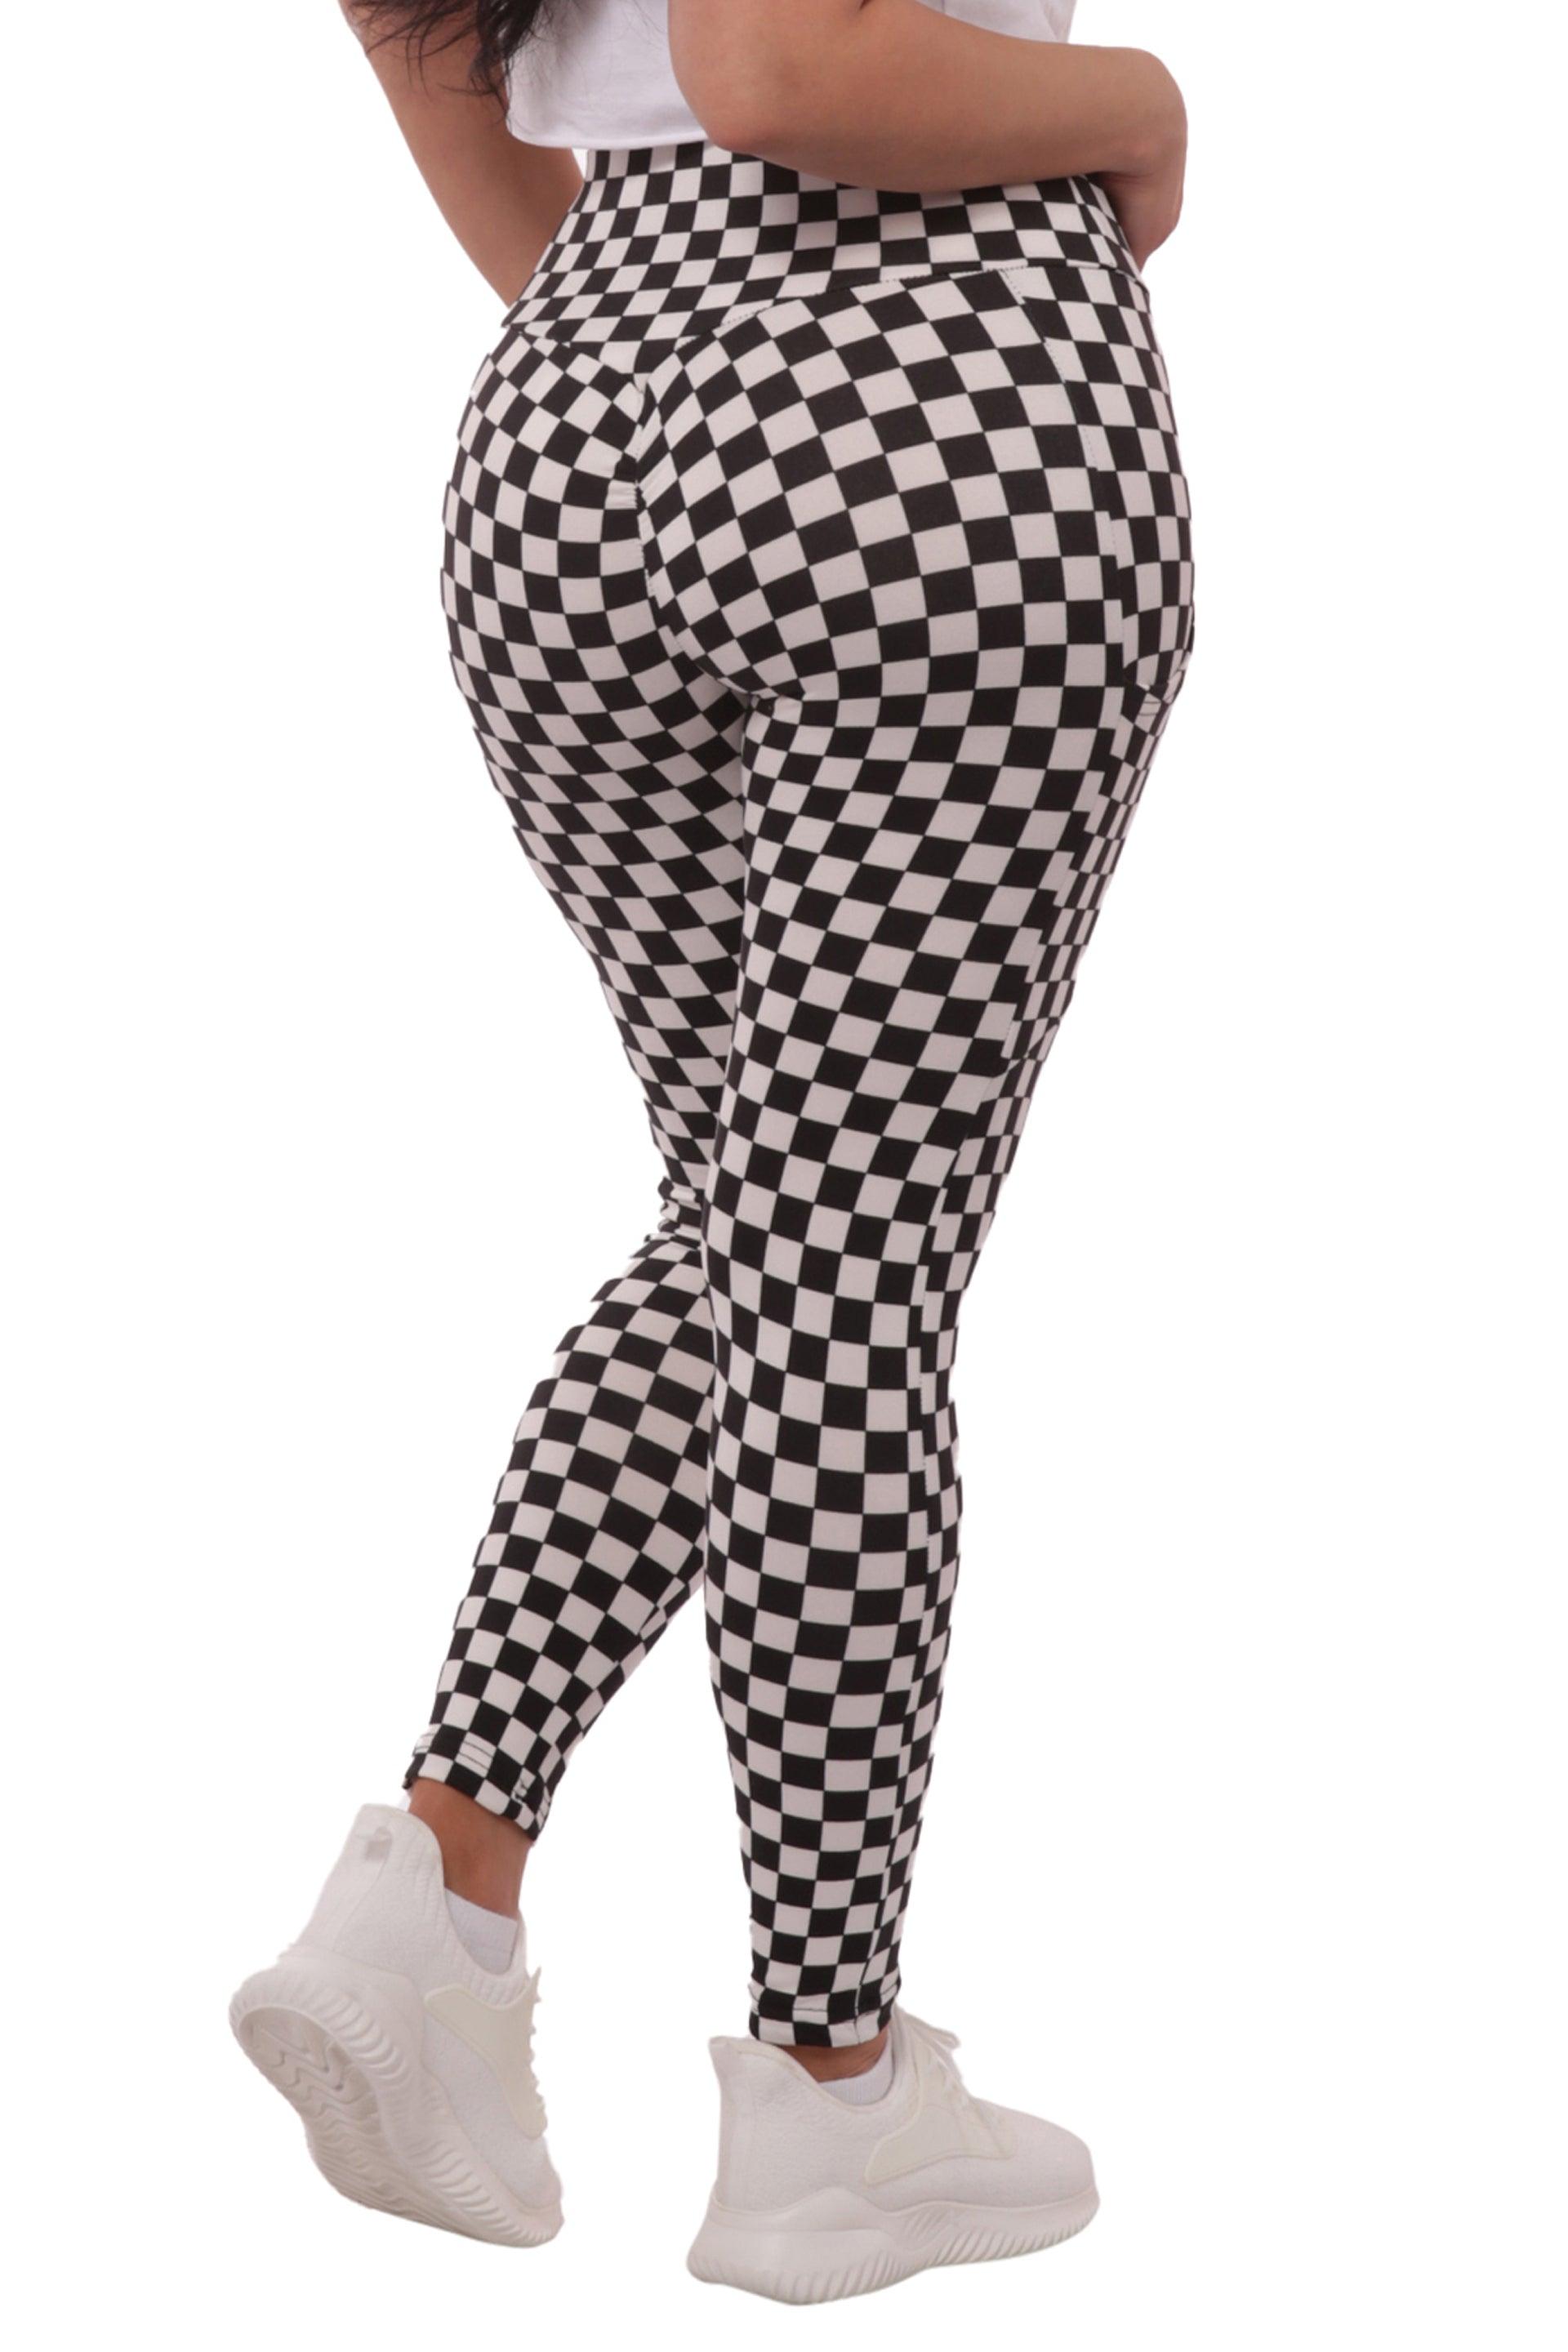 High Waist Fleece Lined Leggings With Side Pockets - Black & White Checkered - SHOSHO Fashion